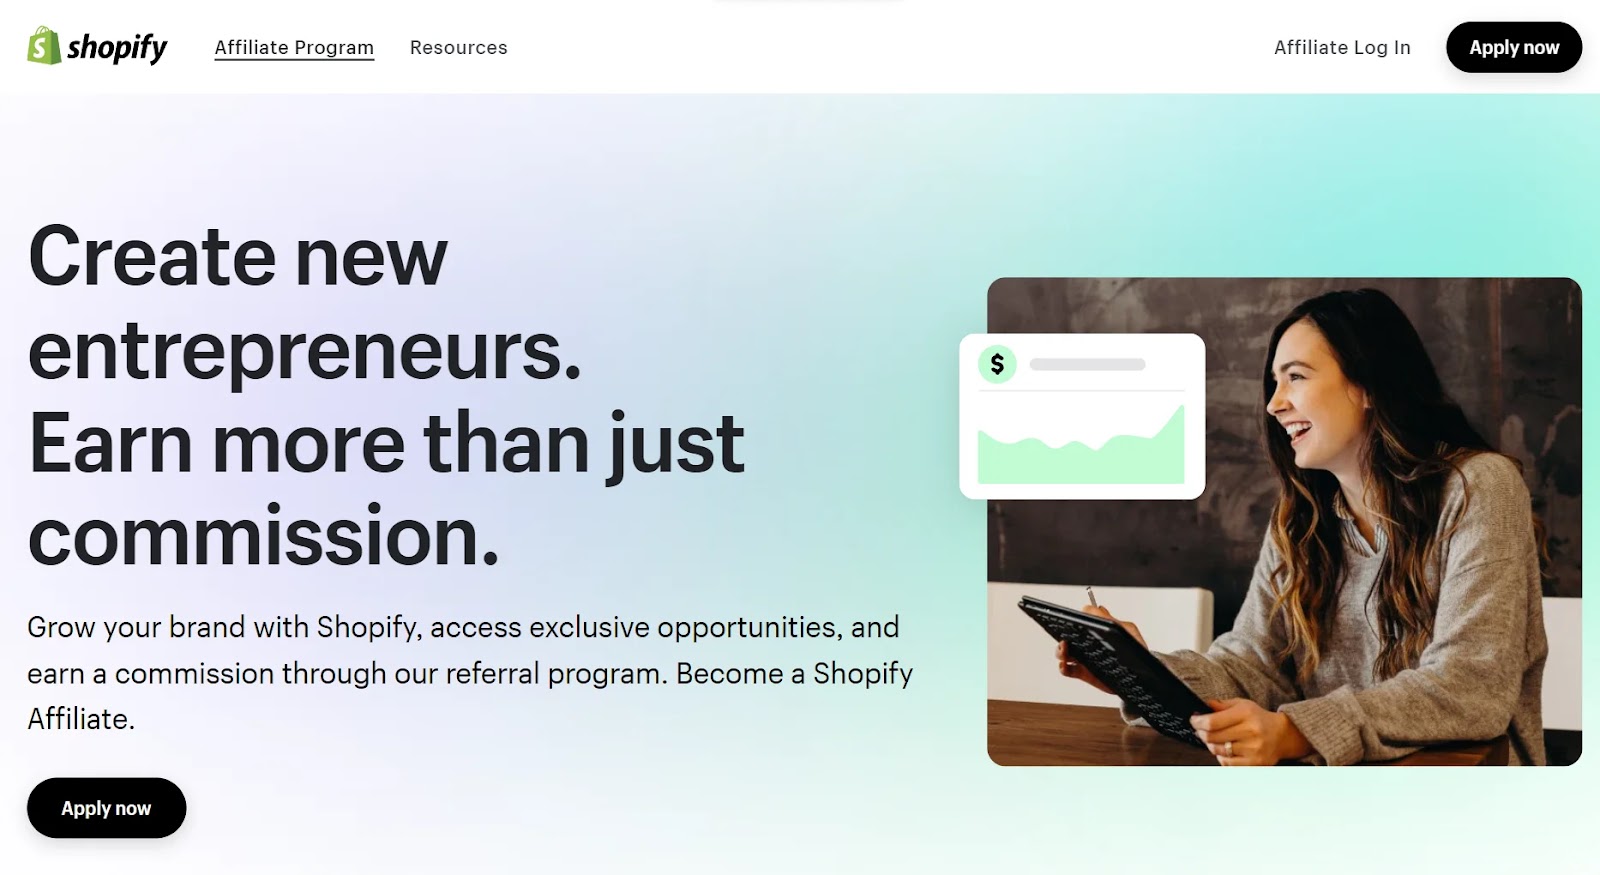 Shopify Affiliate Program landing page